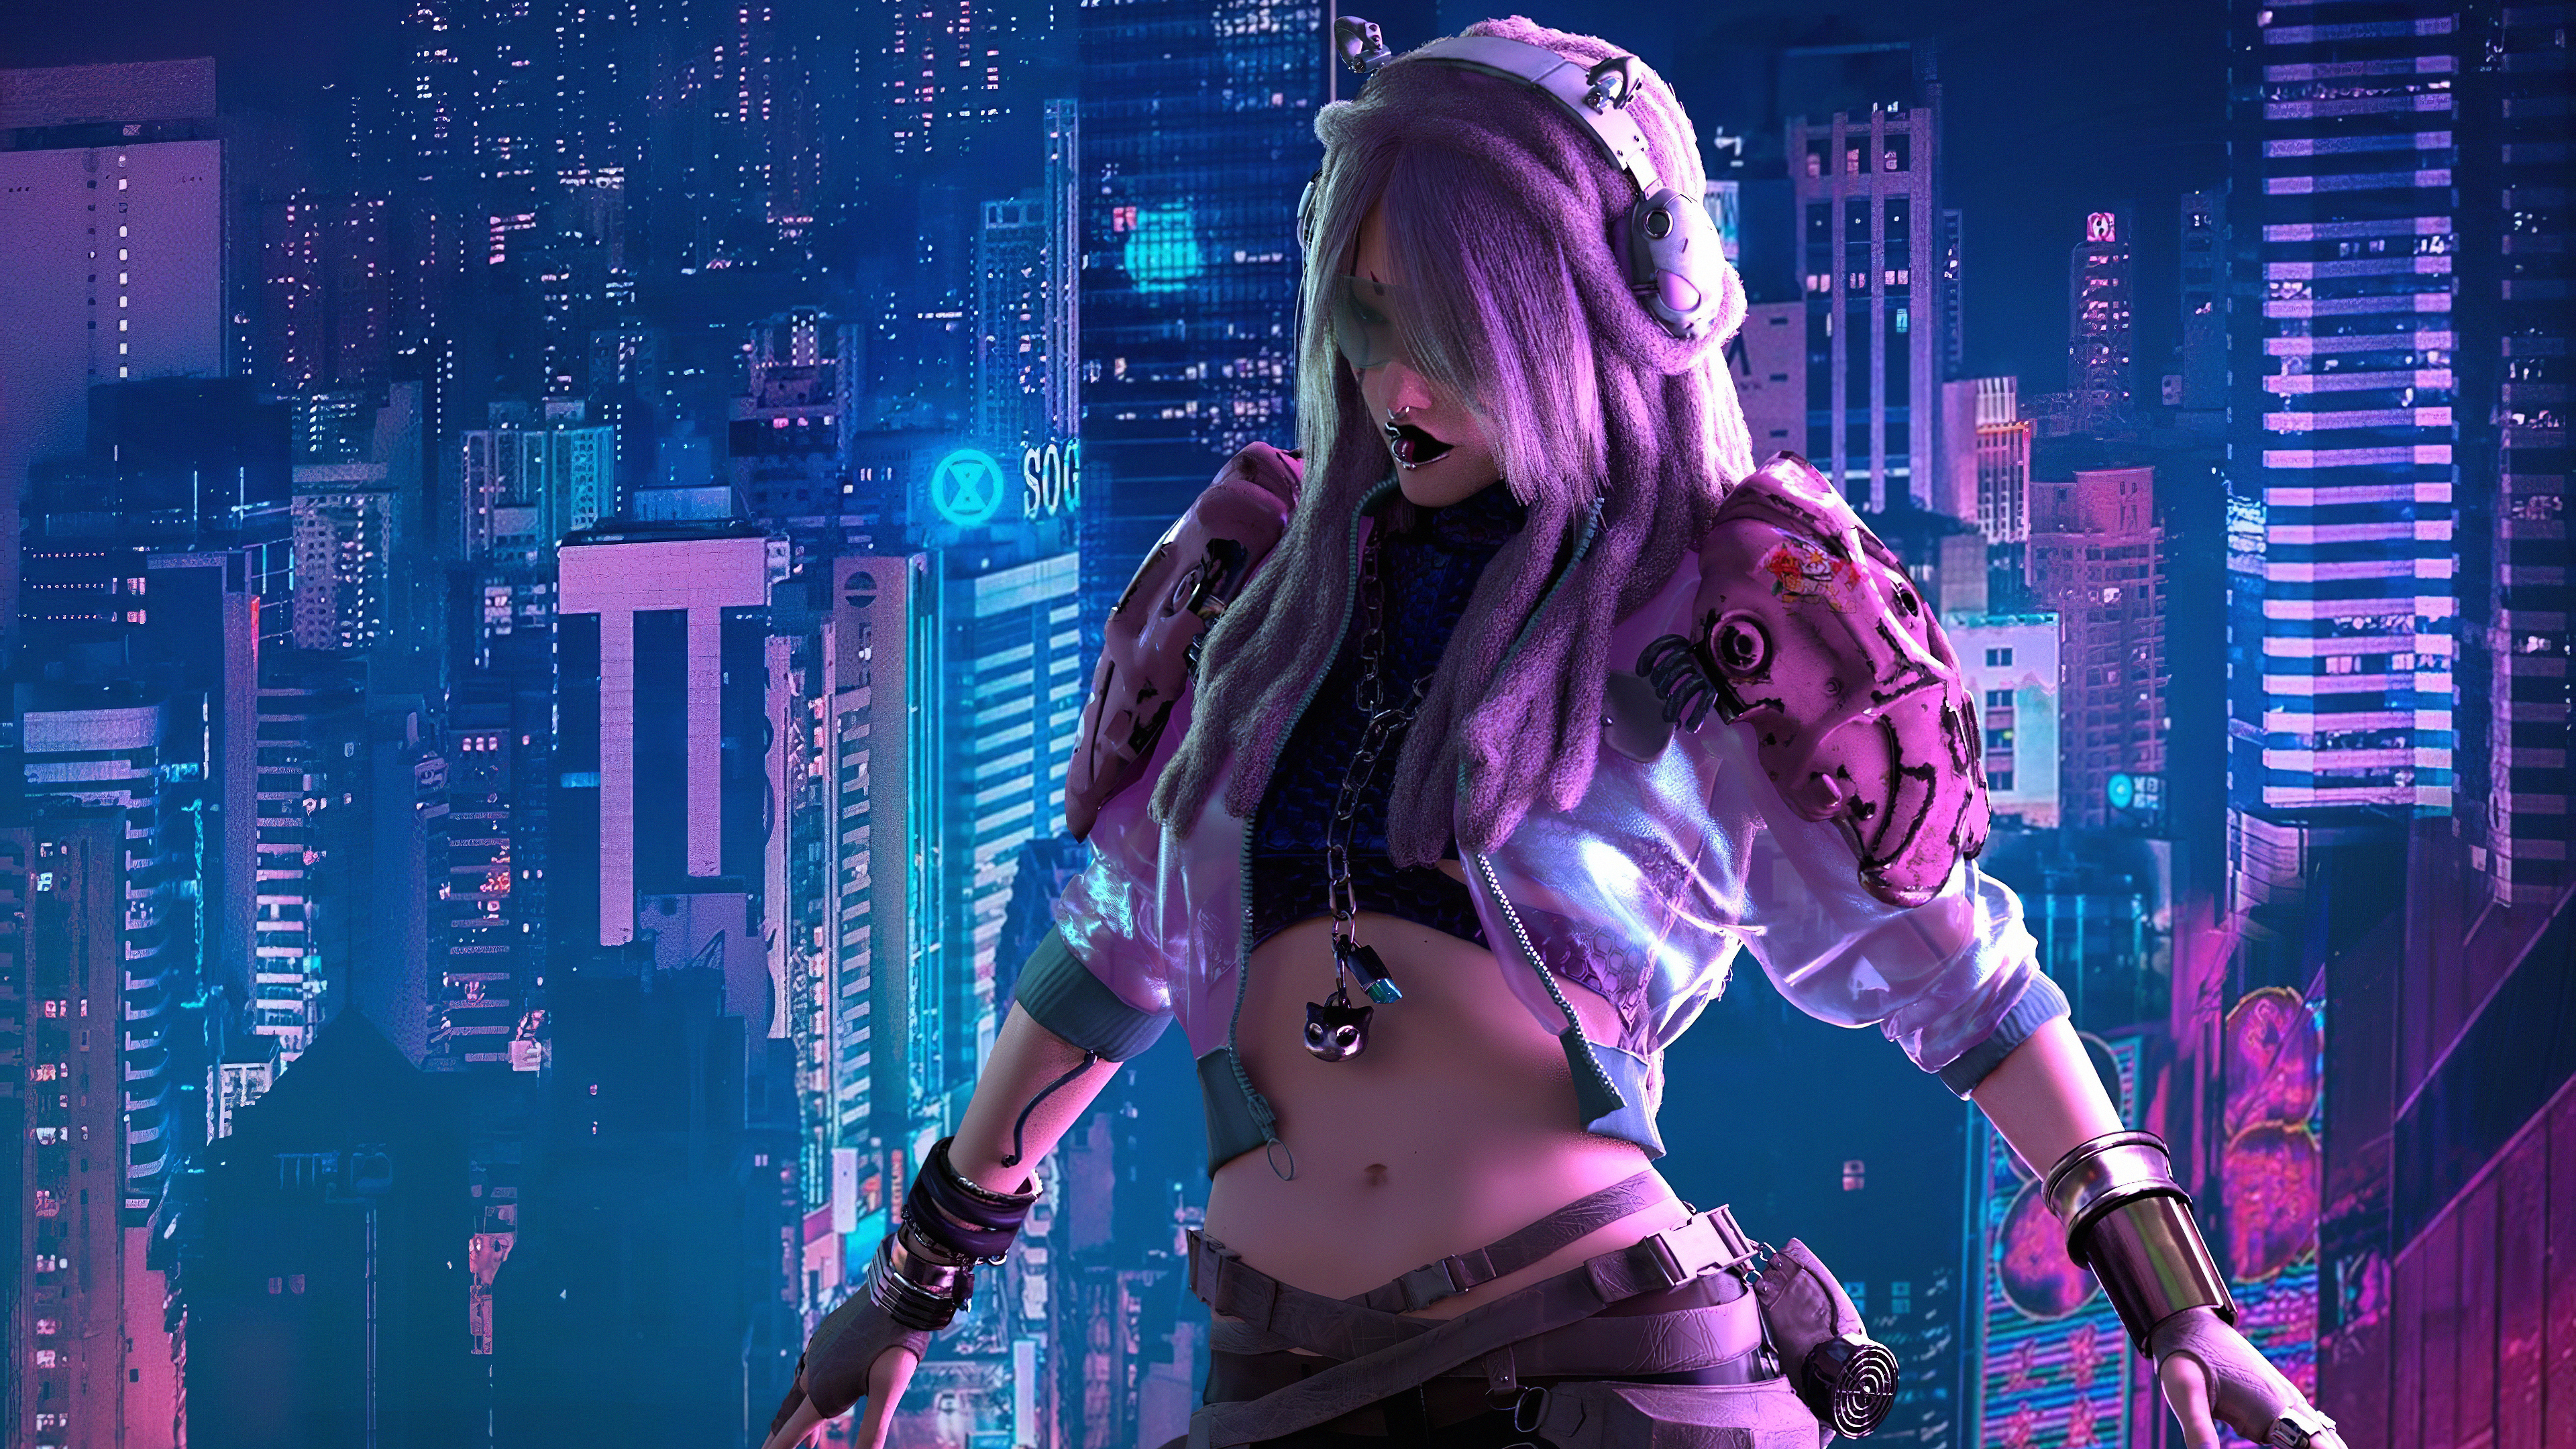 Cyberpunk City Girl 4k Hd Artist 4k Wallpapers Images Backgrounds 8084